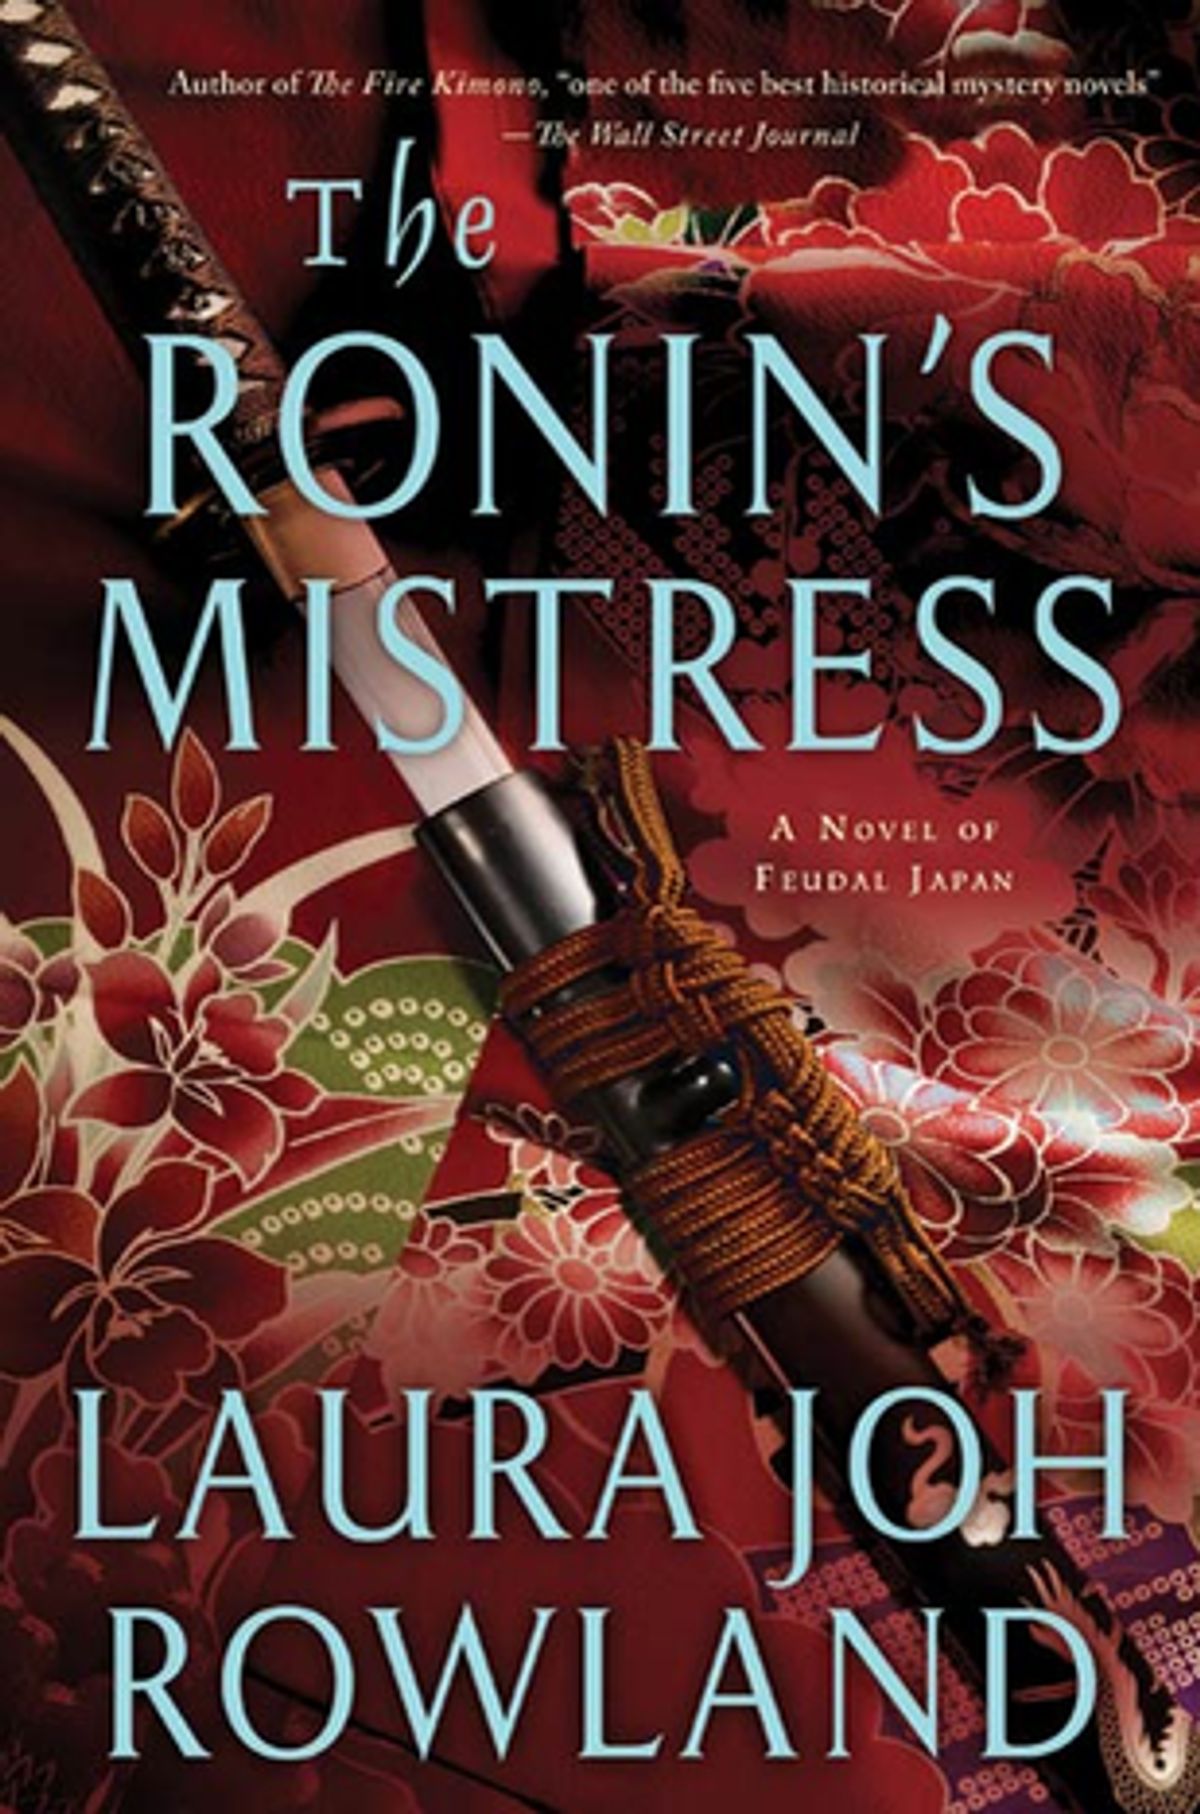 The Ronin's Mistress: A Novel of Fuedal Japan